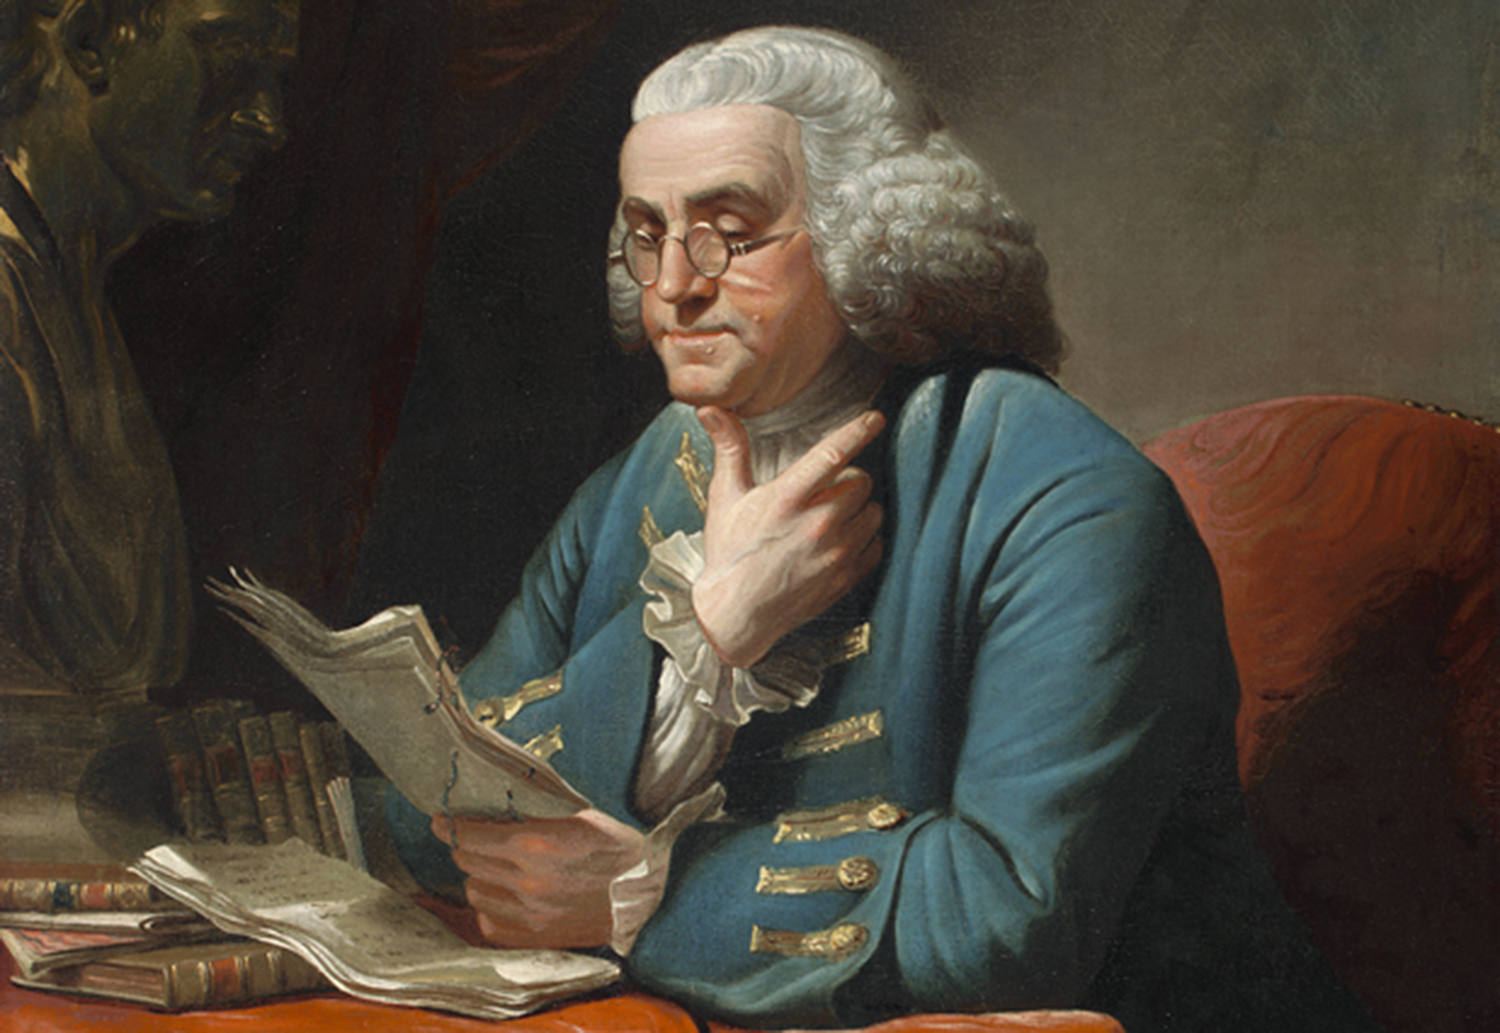 Painting of Benjamin Franklin by David Martin